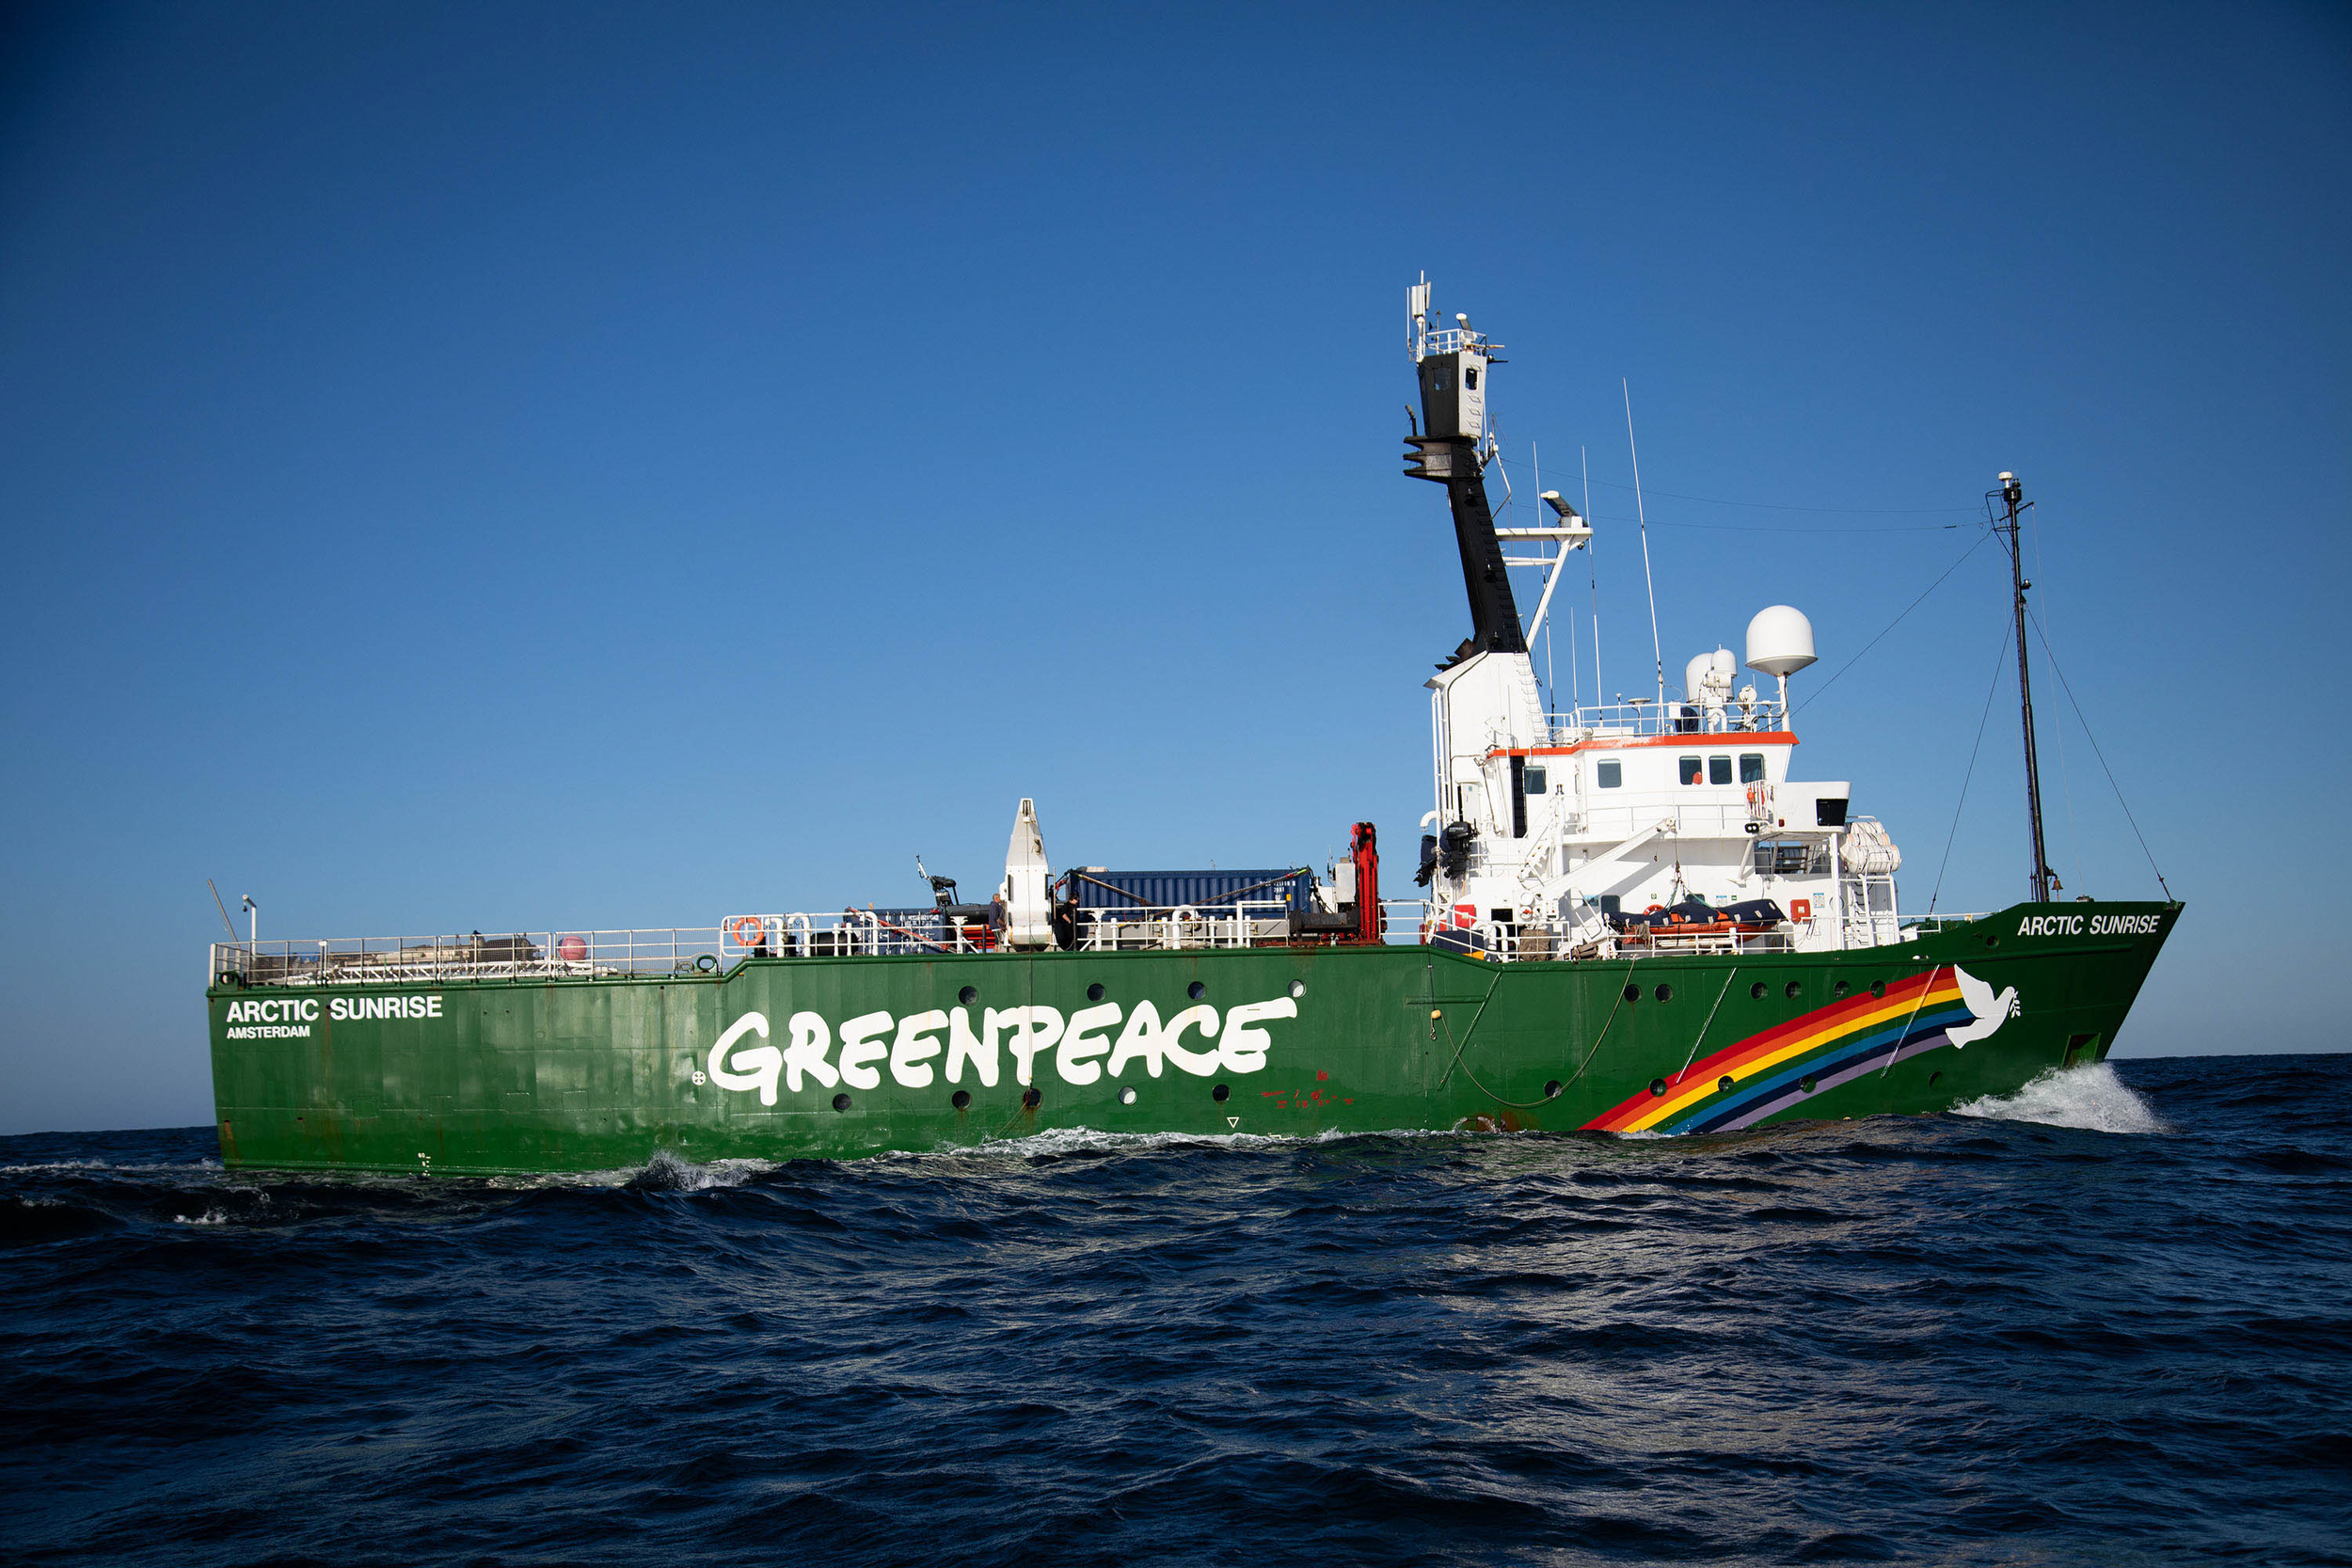 Greenpeace ship MY Arctic Sunrise on the sea with a clear blue sky above.